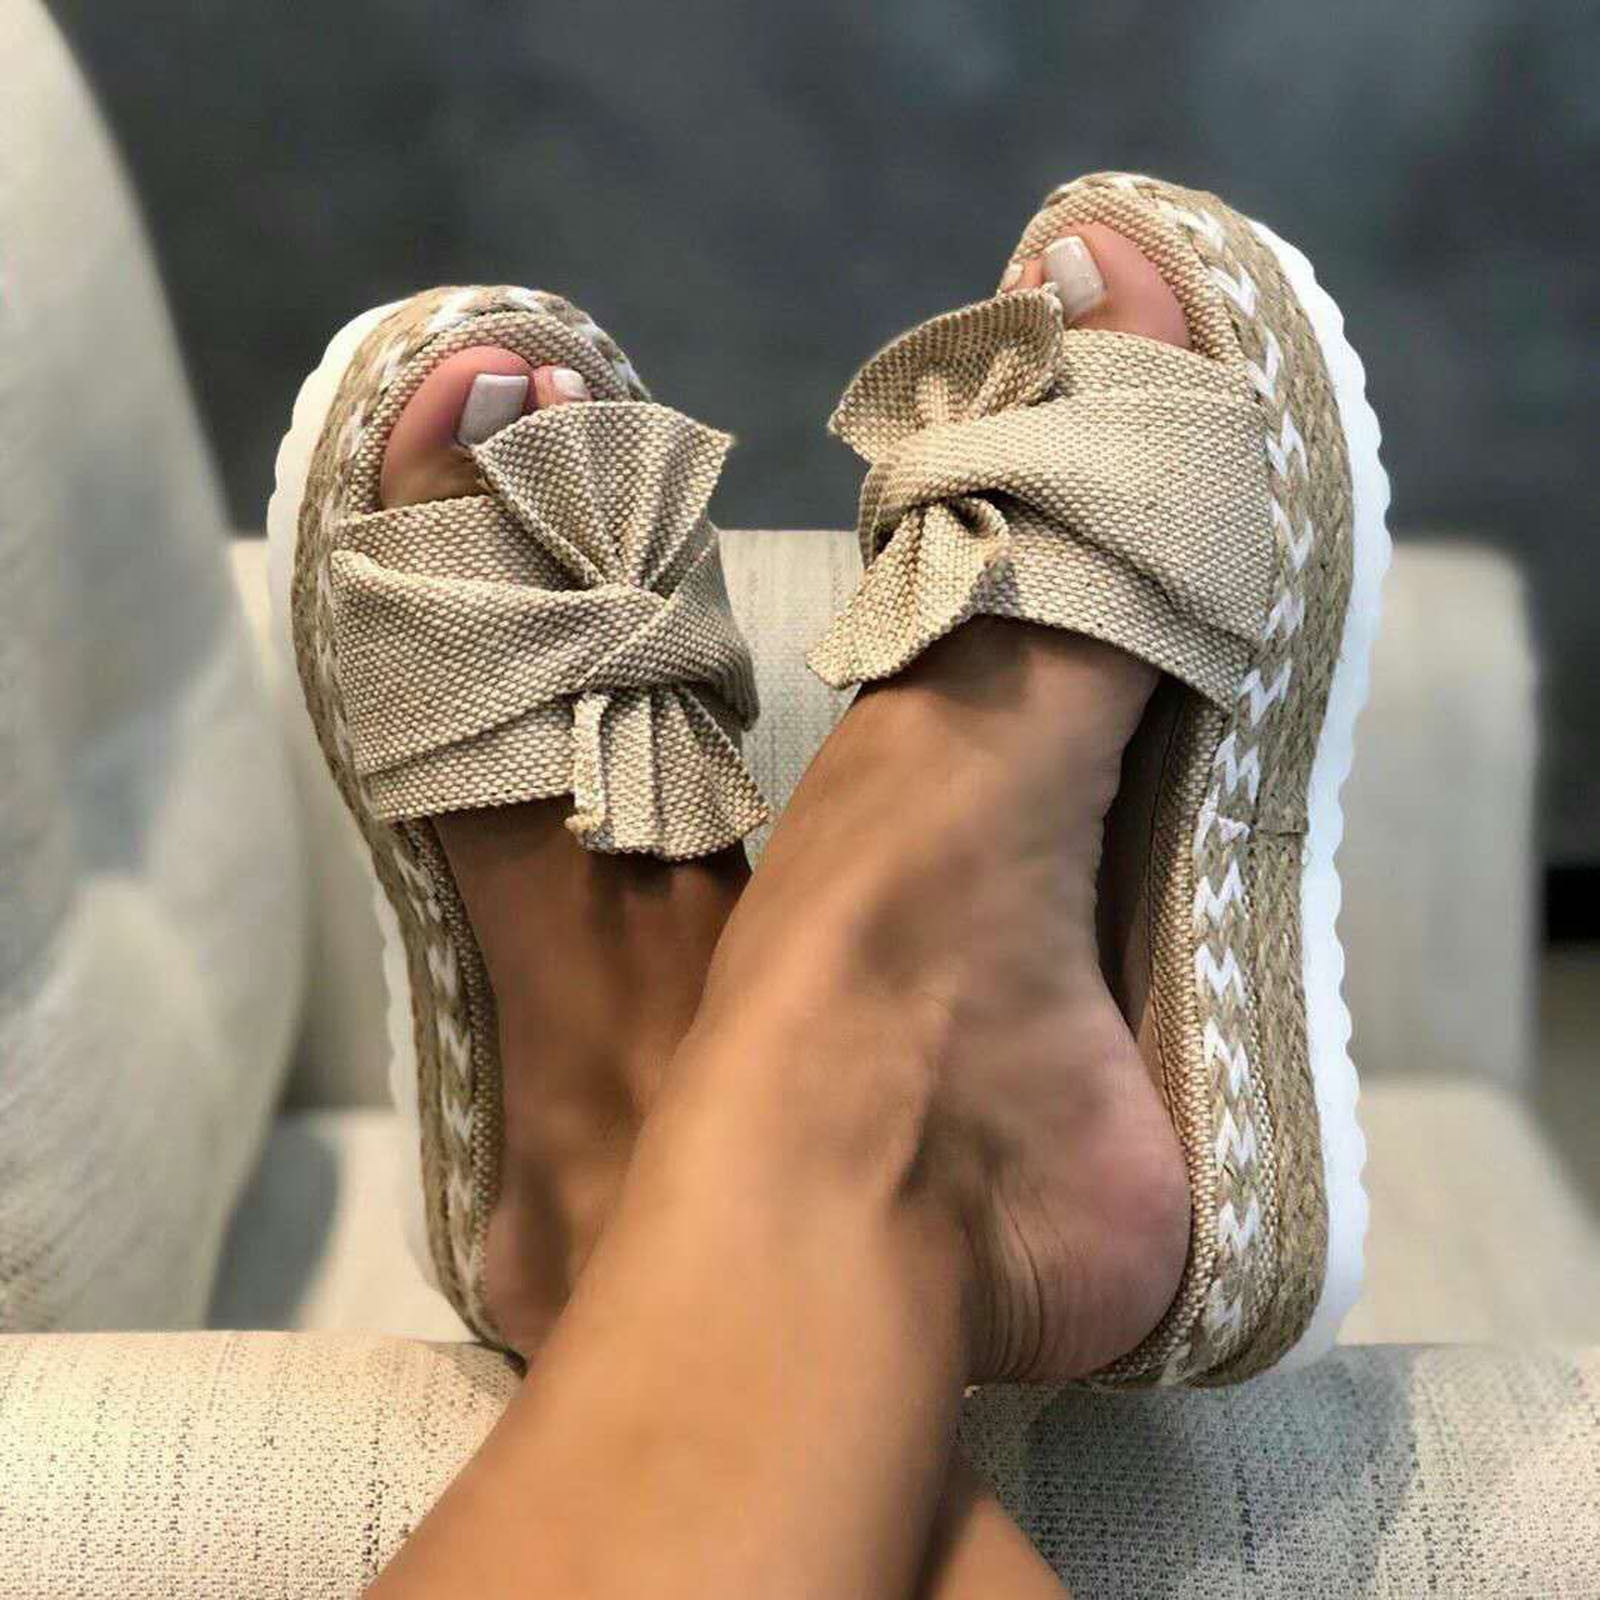 Gibobby Sandals for Women Platform,2019 Summer Comfy Platforms Sandal Shoes Beach Travel Shoe Casual Flip Flops Slippers 